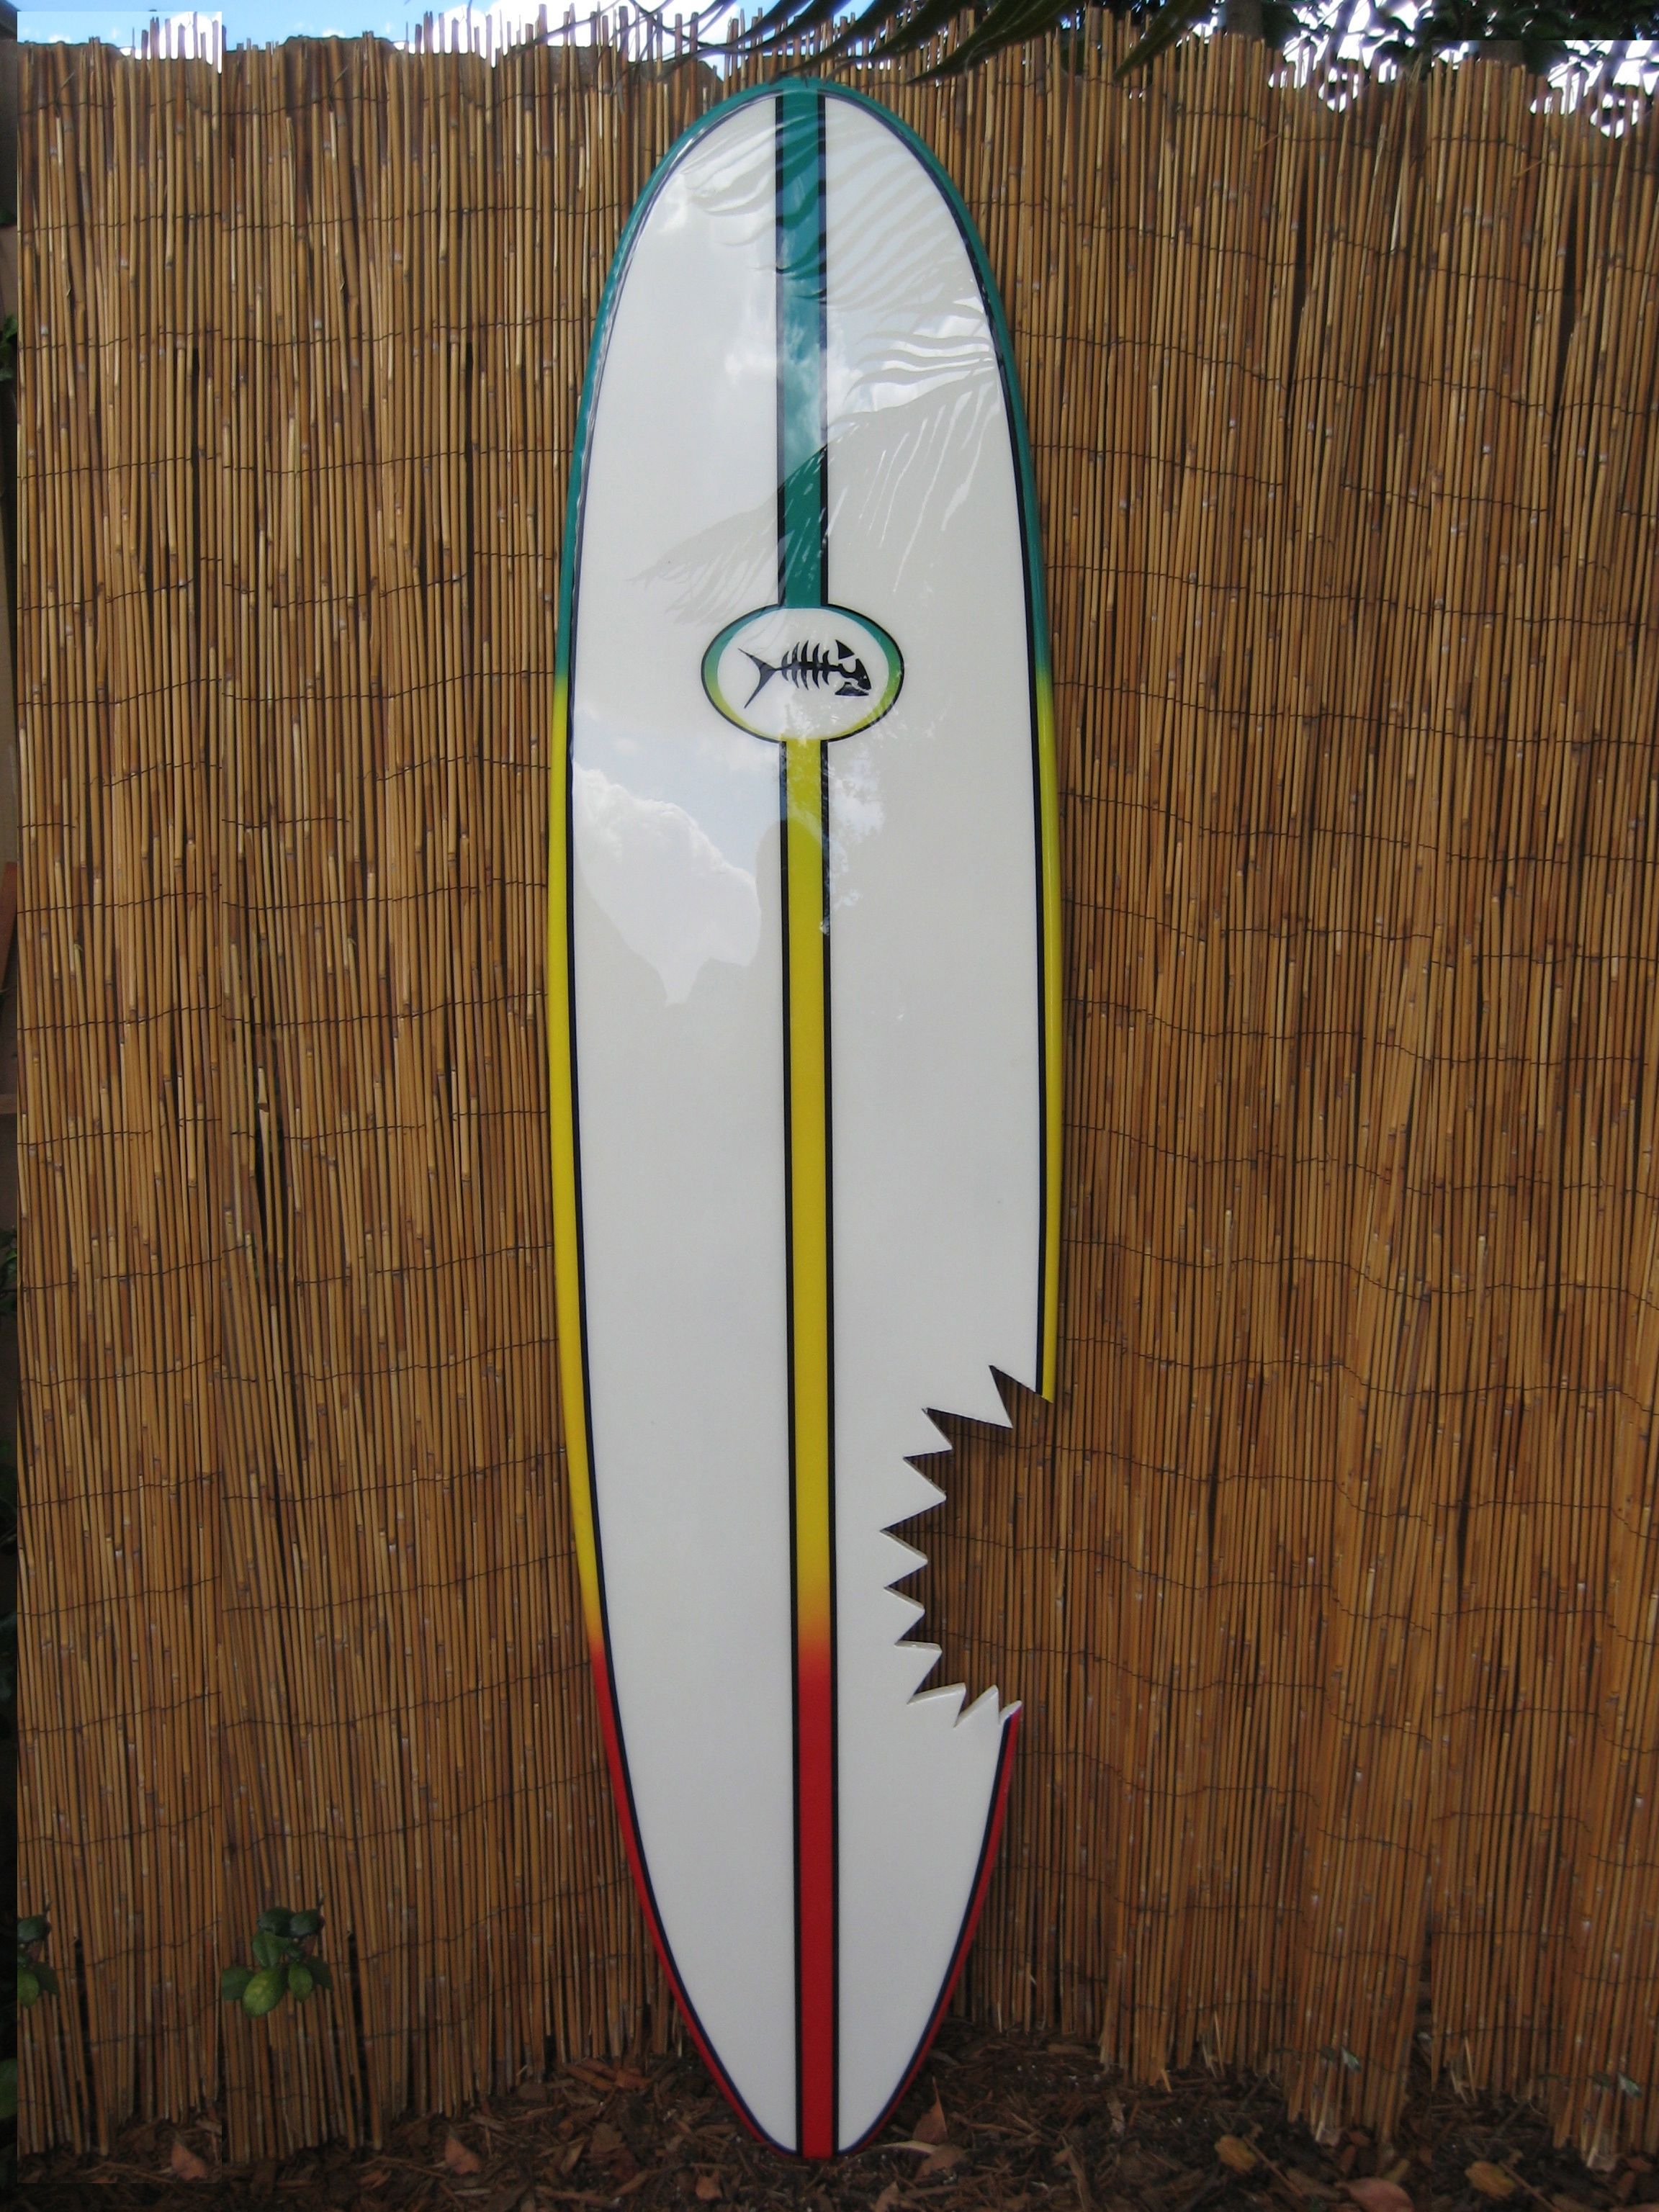 Decorative Wood Surfboard Art Wall Surf Surfboard Decor Regarding 2017 Surfboard Wall Art (View 14 of 20)